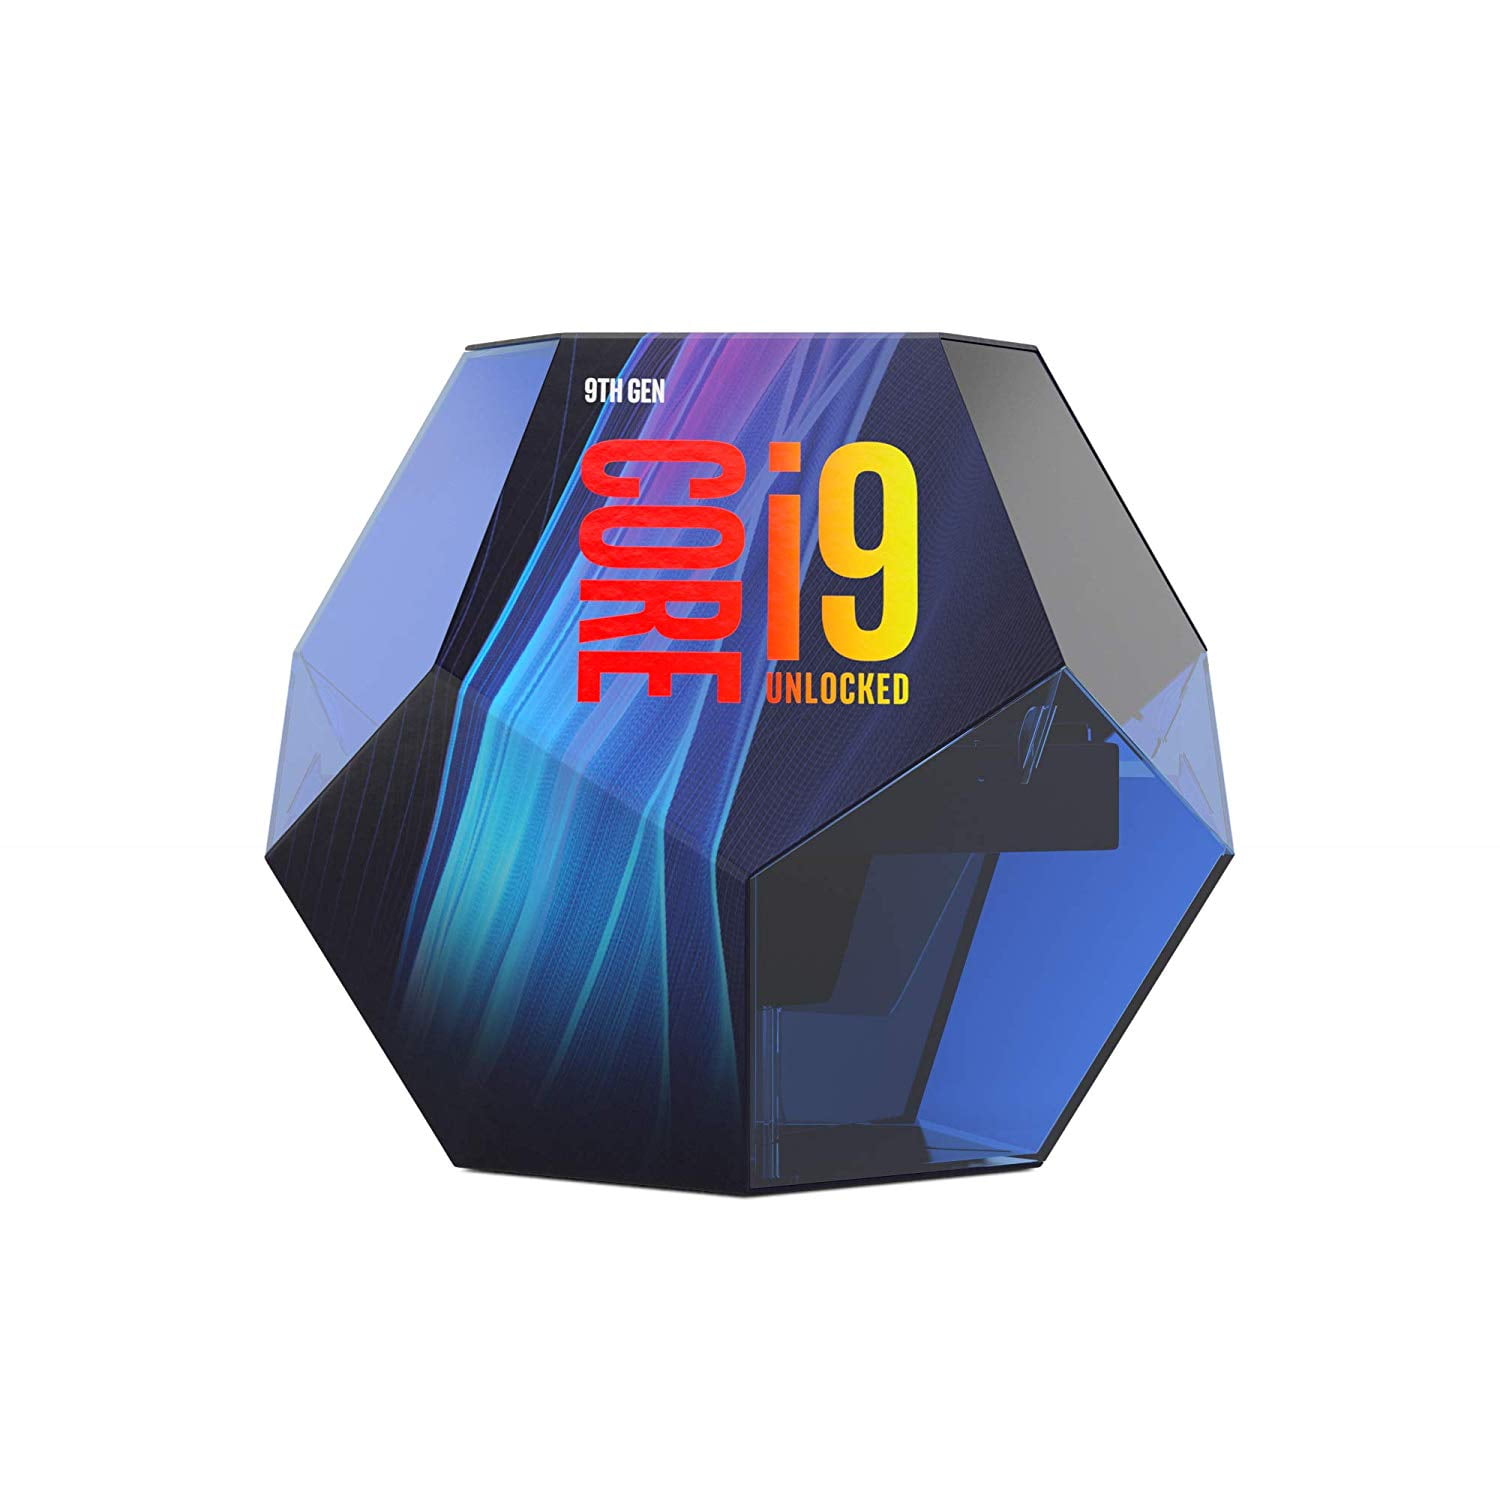 Intel Core i9-9900K Octa-core (8 Core) 3.6GHz Processor - Retail Pack